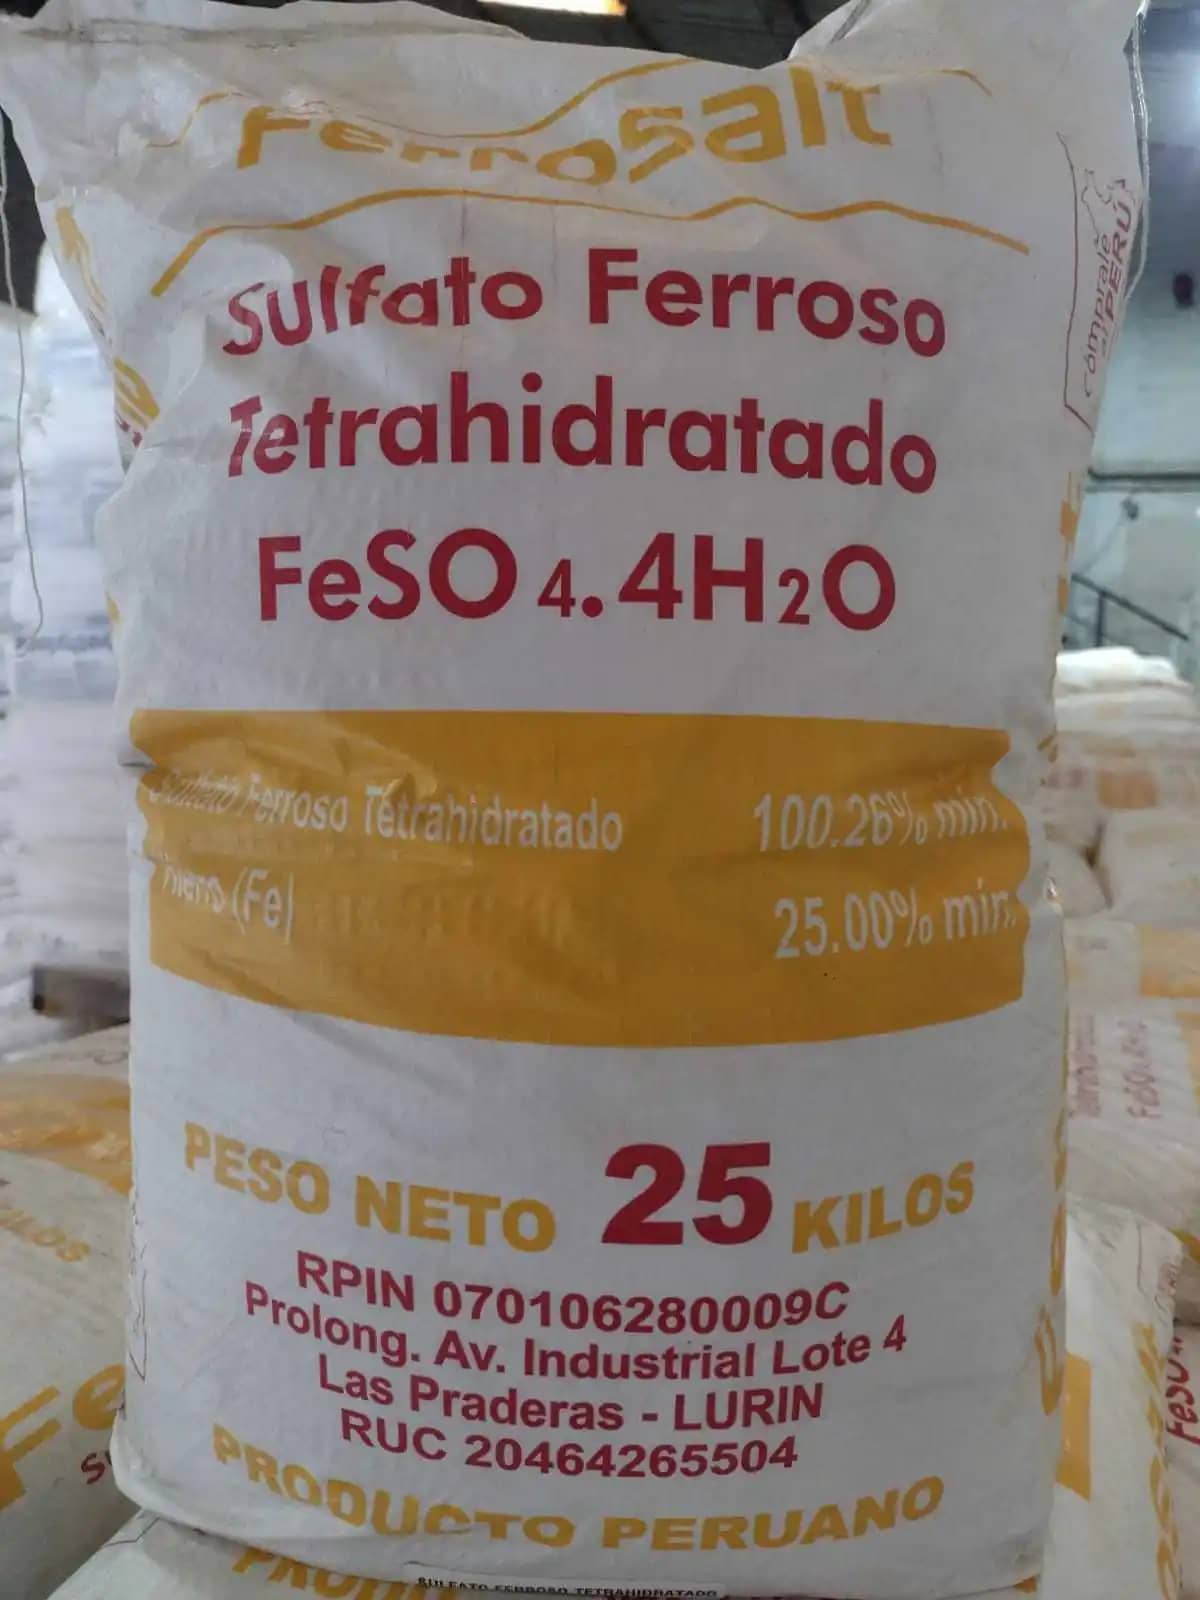 Sulfato de Hierro - 1 Kg